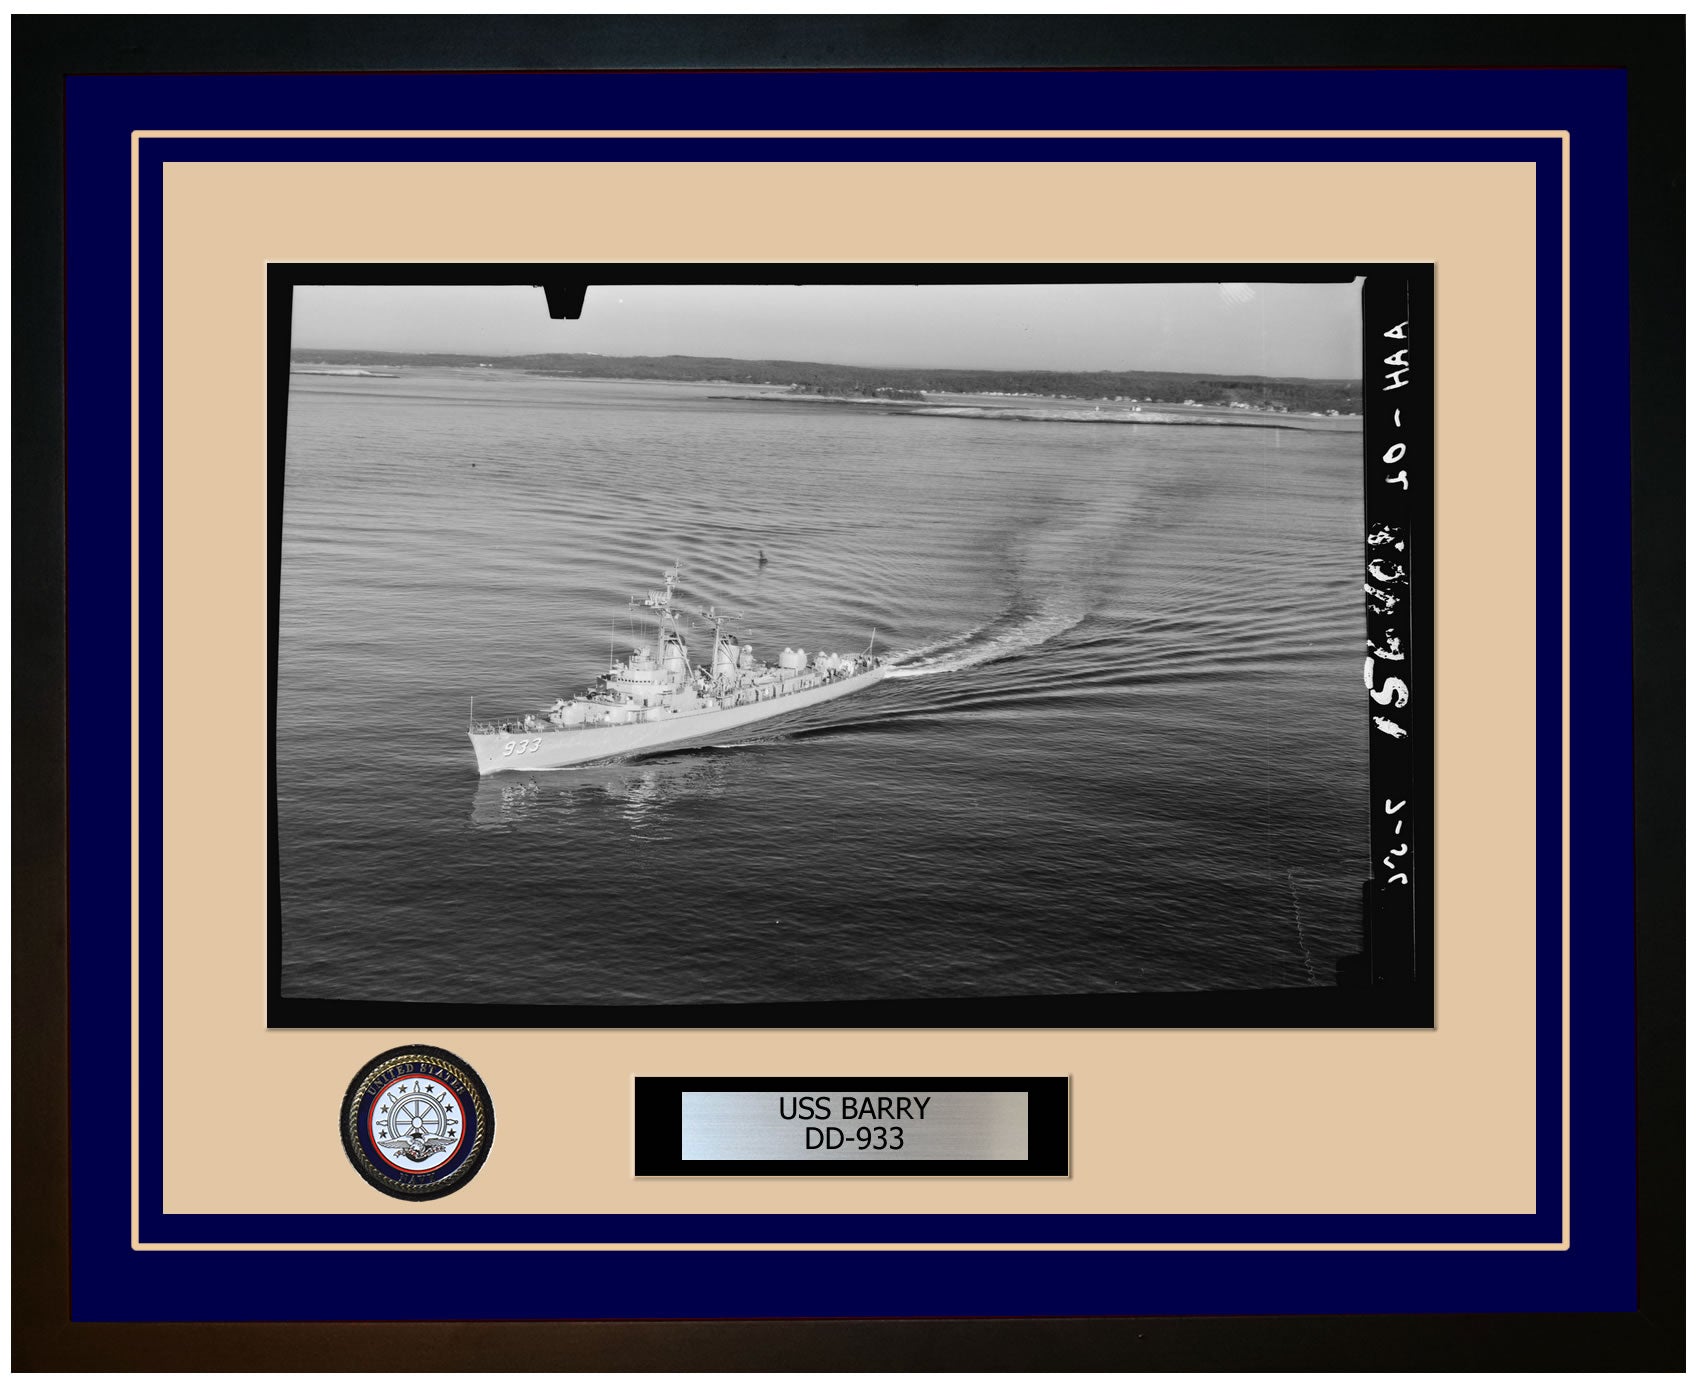 USS BARRY DD-933 Framed Navy Ship Photo Blue